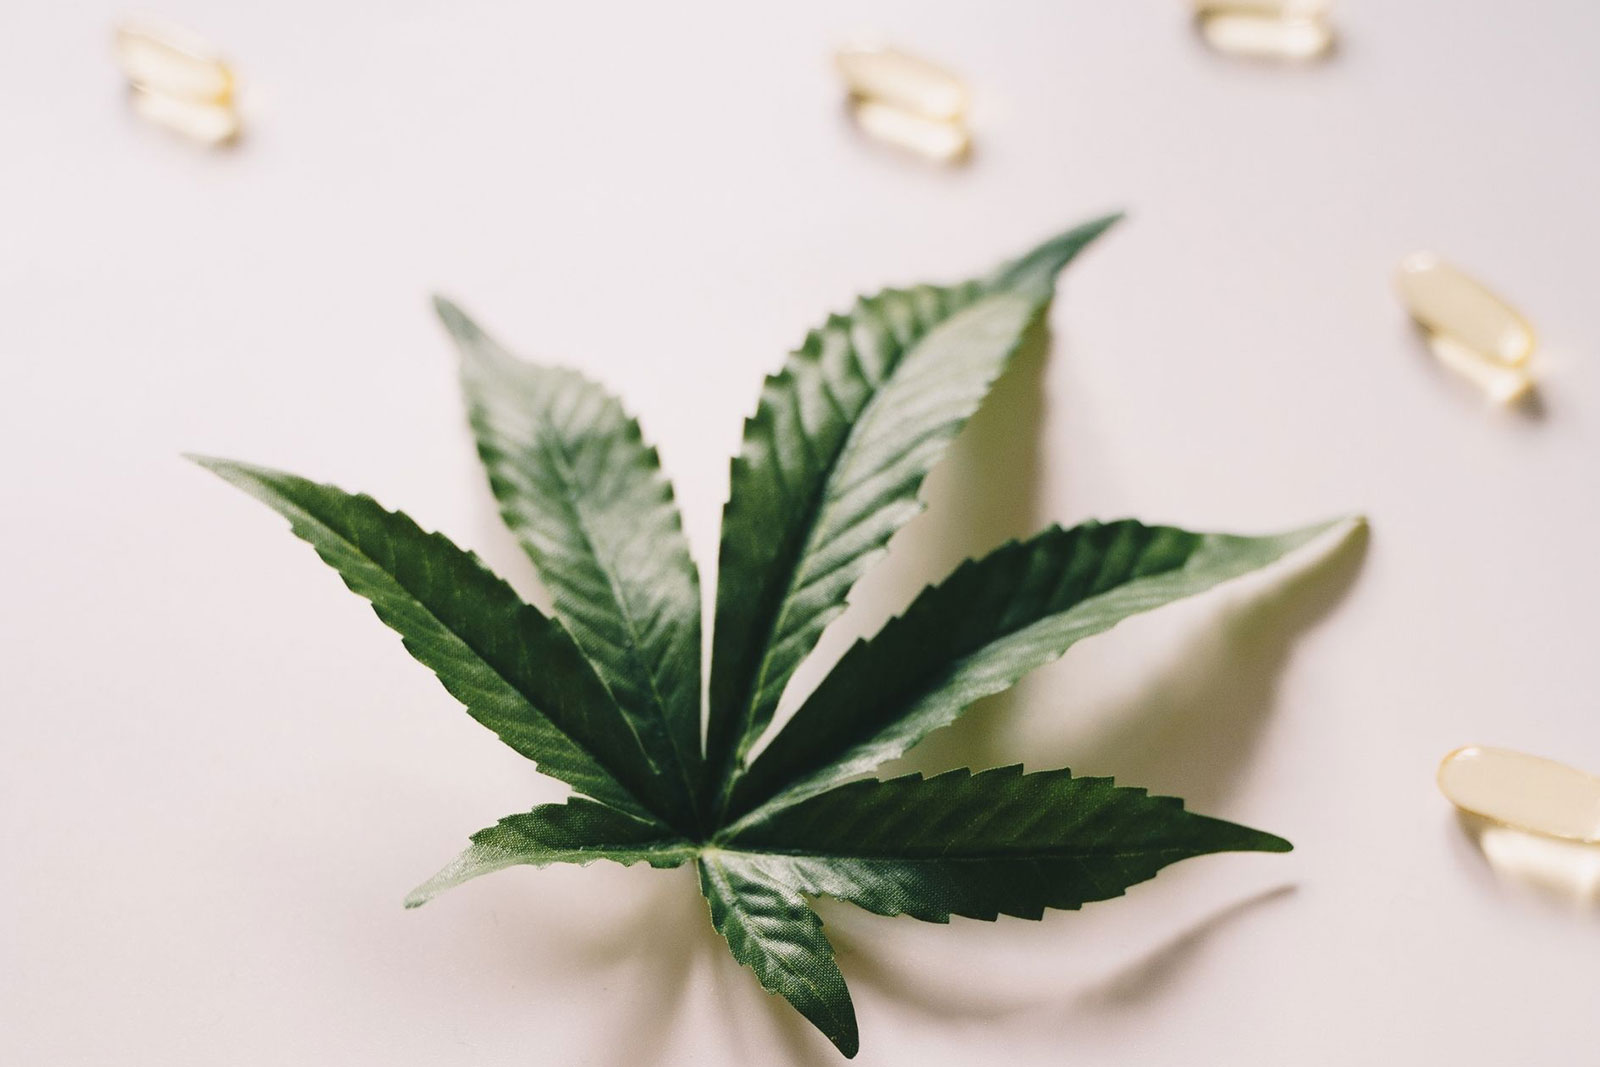 A cannabis leaf and CBD oil capsules